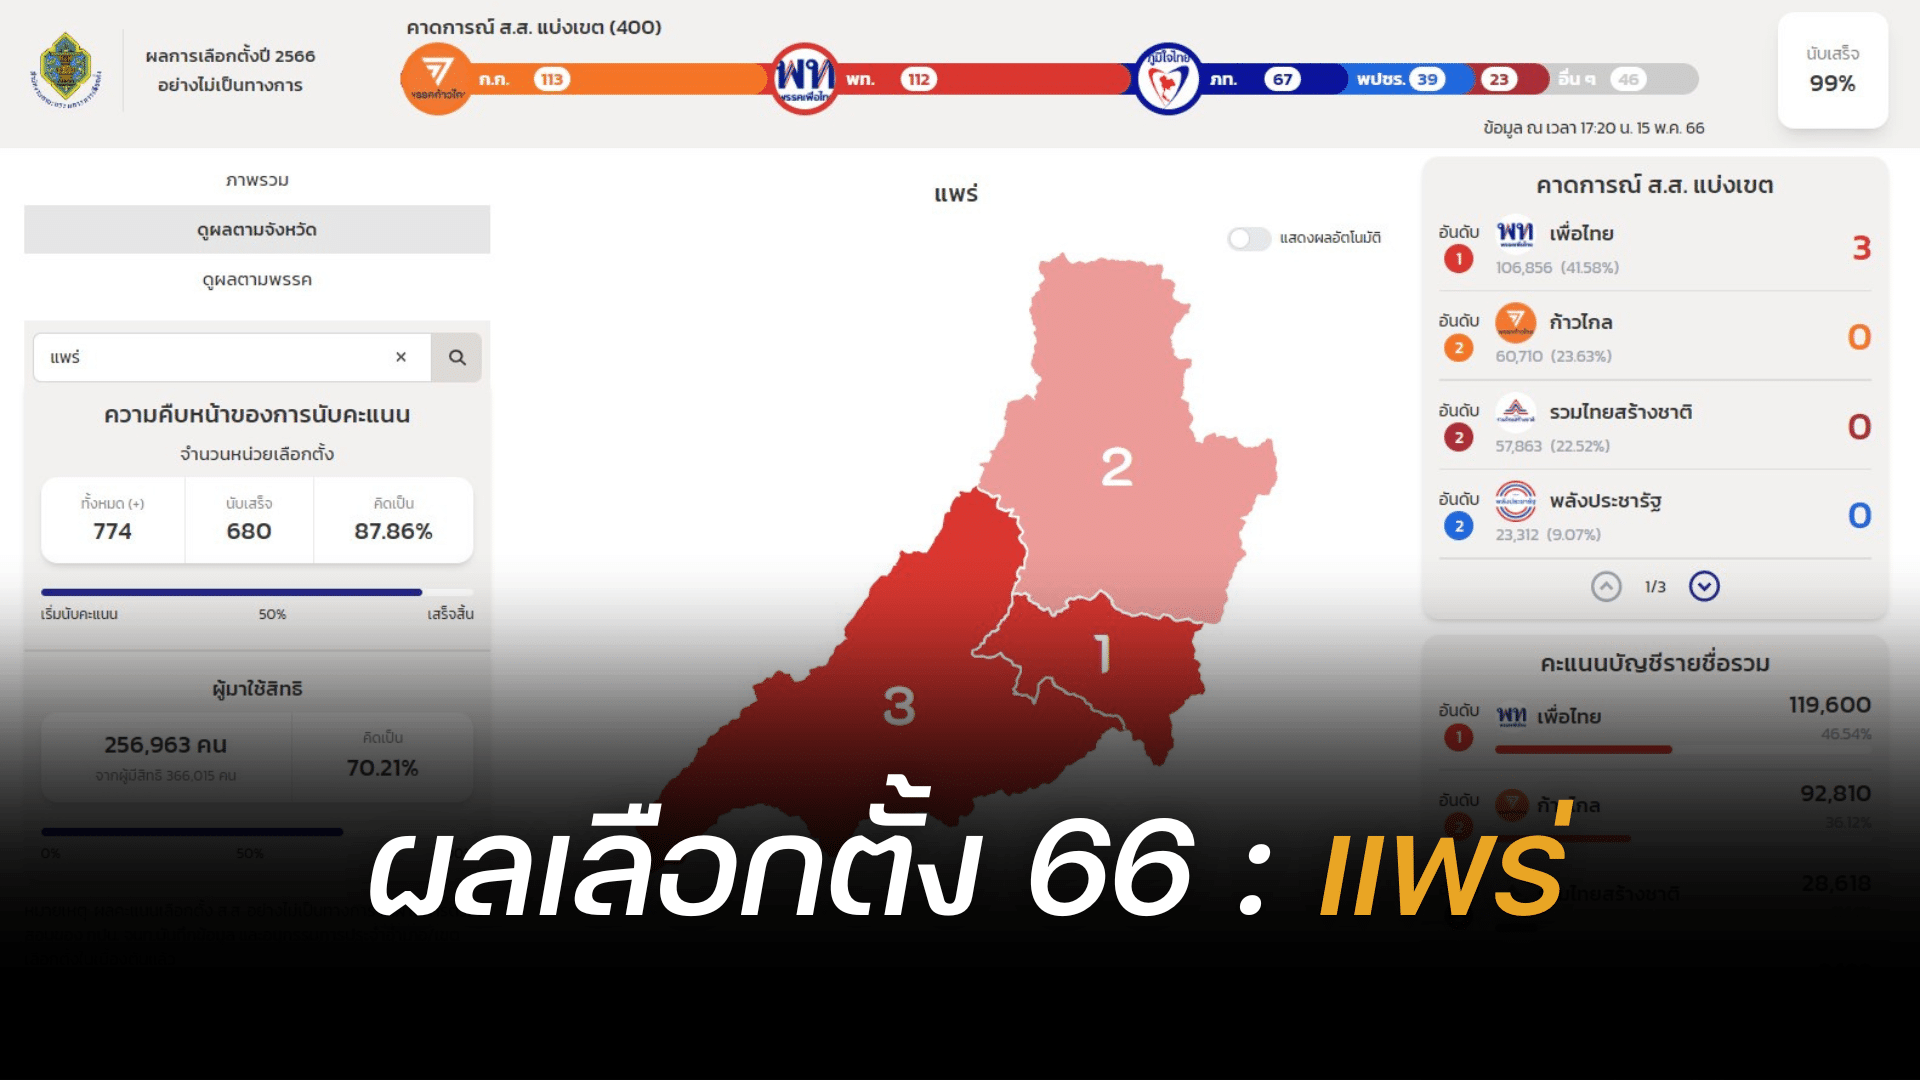 Thailand election 2566 Phrae